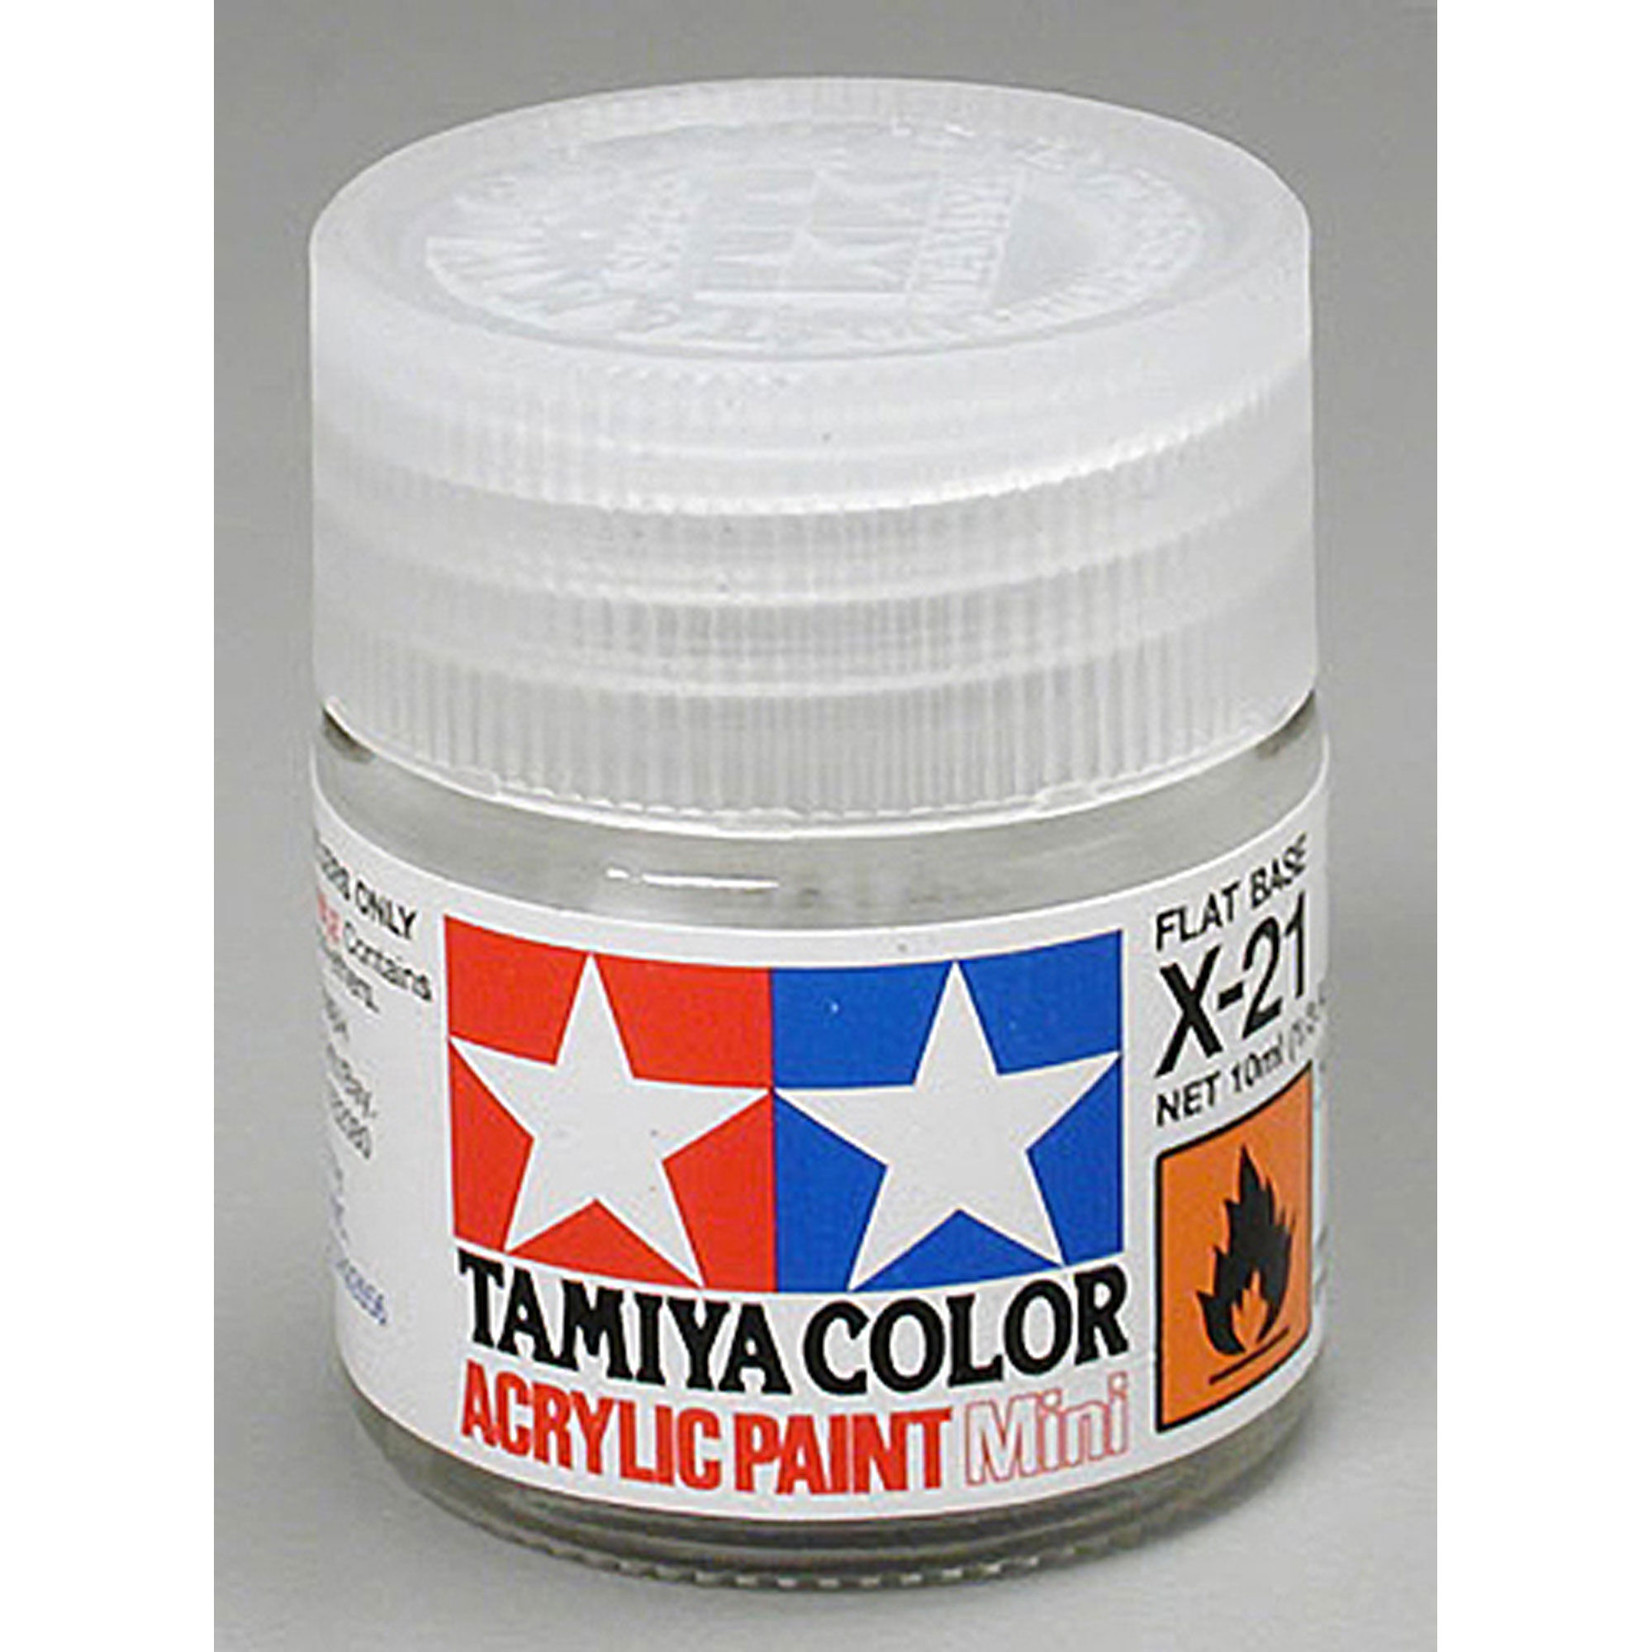 Tamiya Acrylic Mini X21, Flat Base